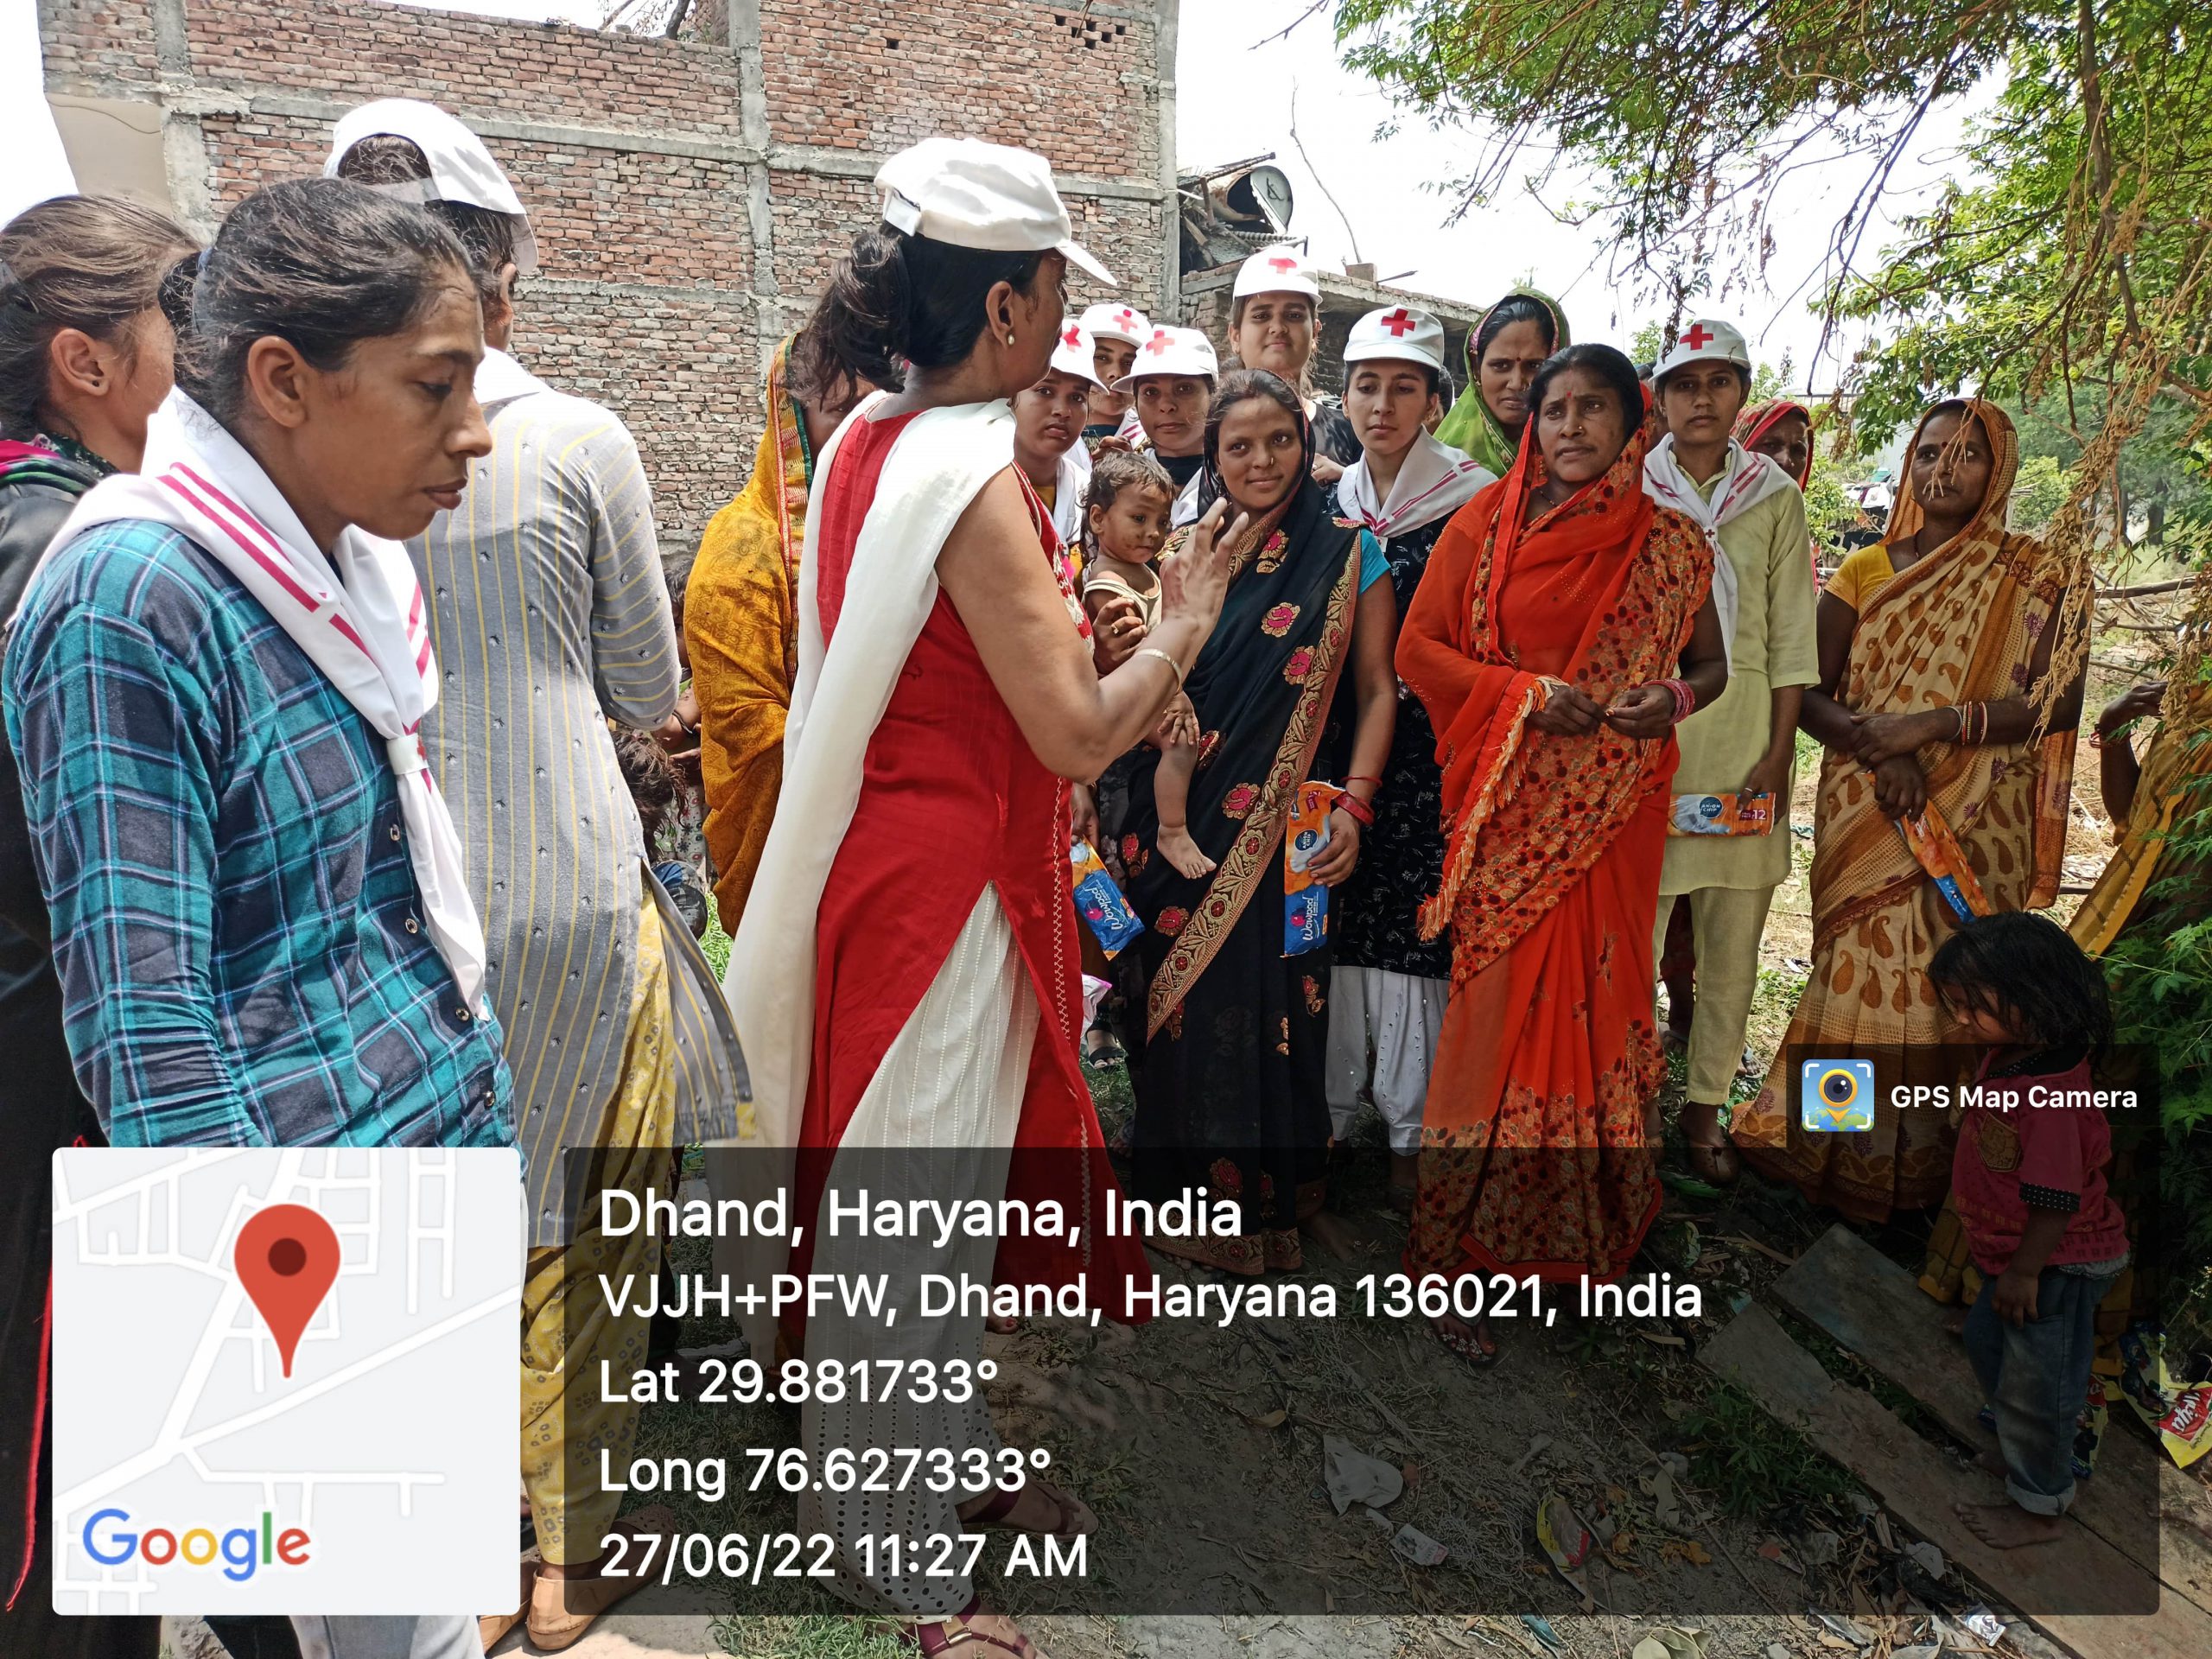 Menstrual Hygiene Awareness Programme by Red Cross in slum areas